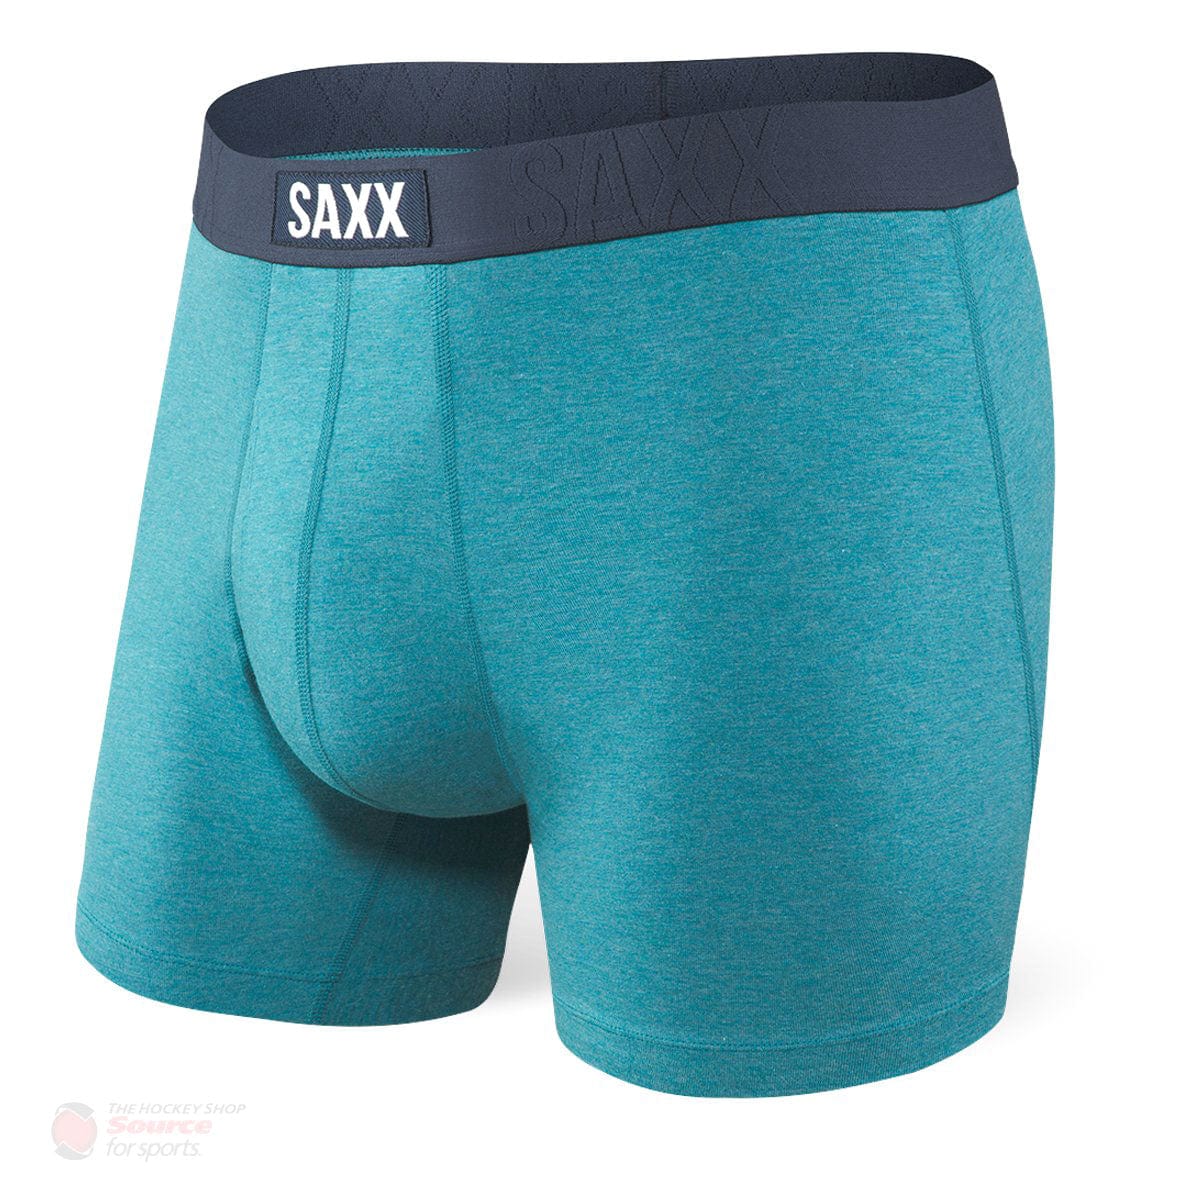 Saxx Sport Mesh Boxers - Teal